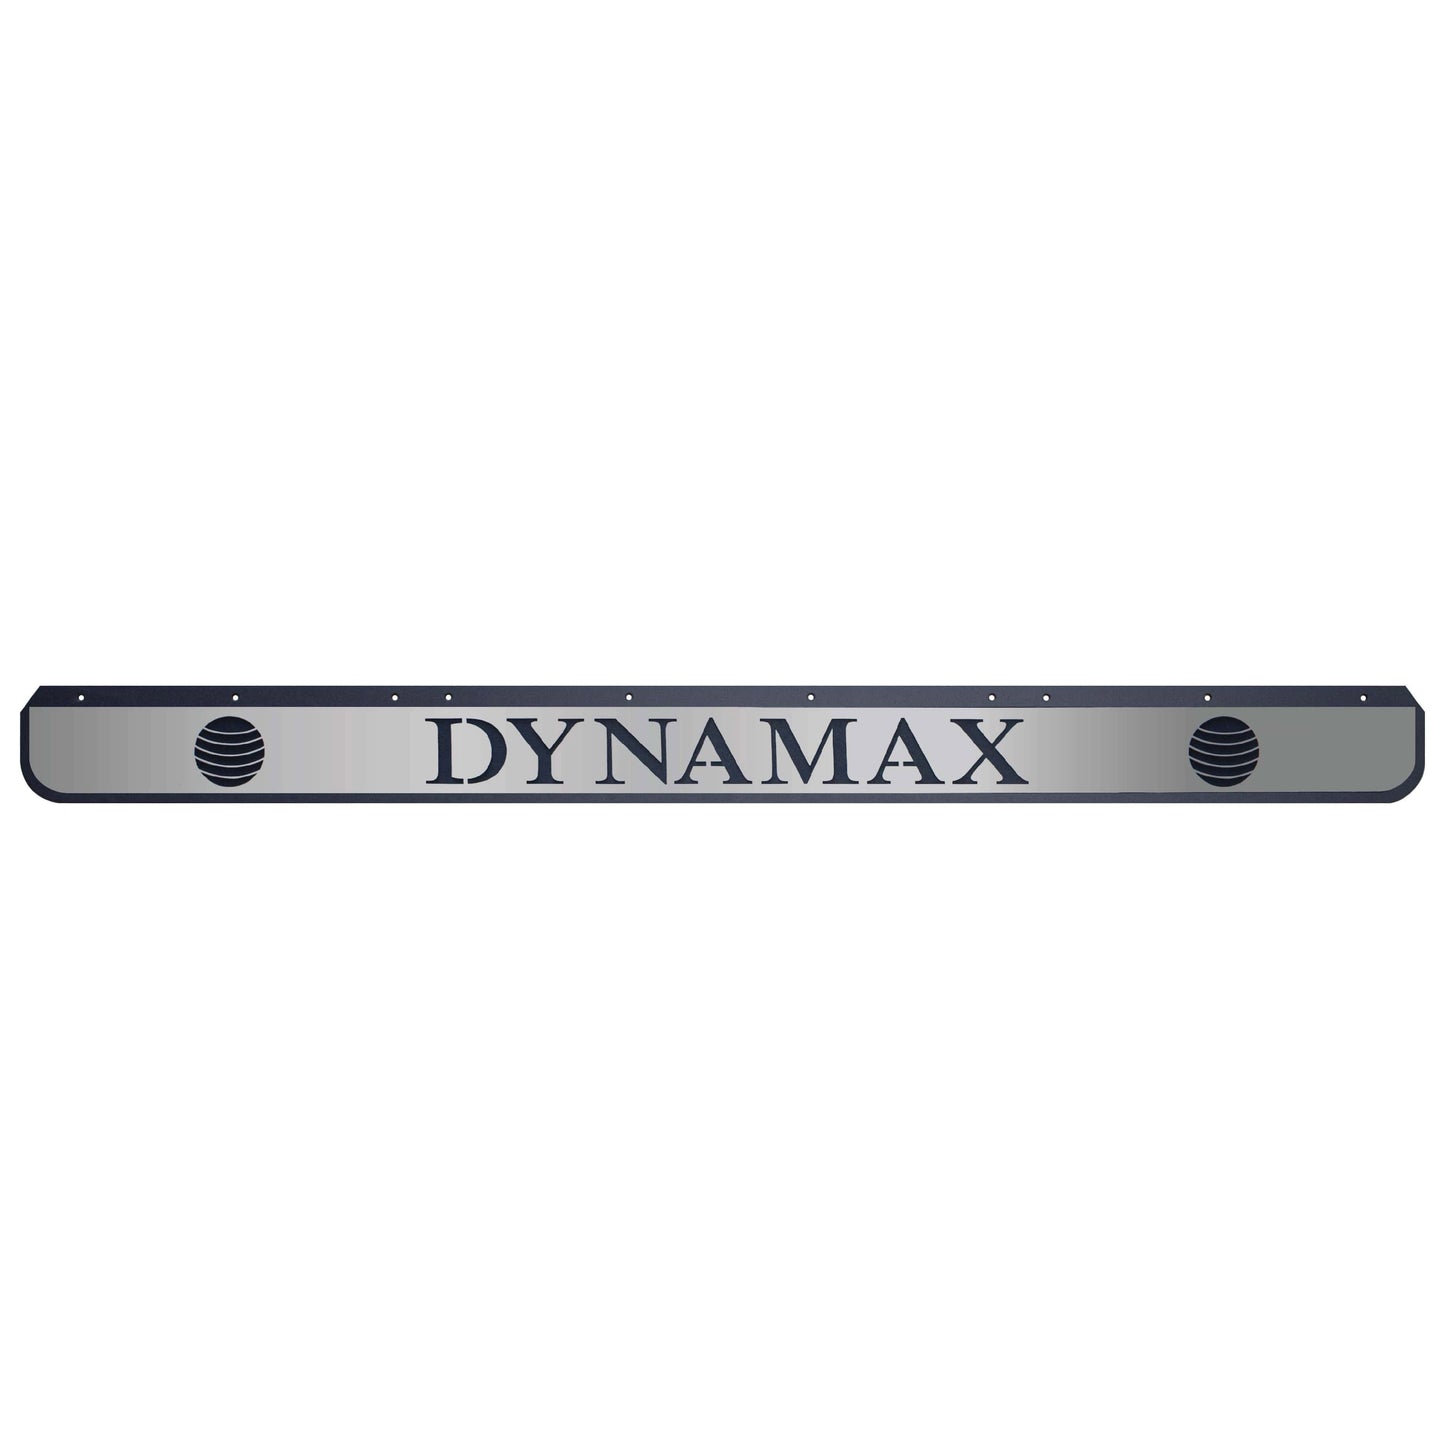 Future-Sales-Rock-Guard-DYNAMAX-Class-C-7-inch-MFR-DYN-7S-Mirror-Finish-Face-Plate-backer